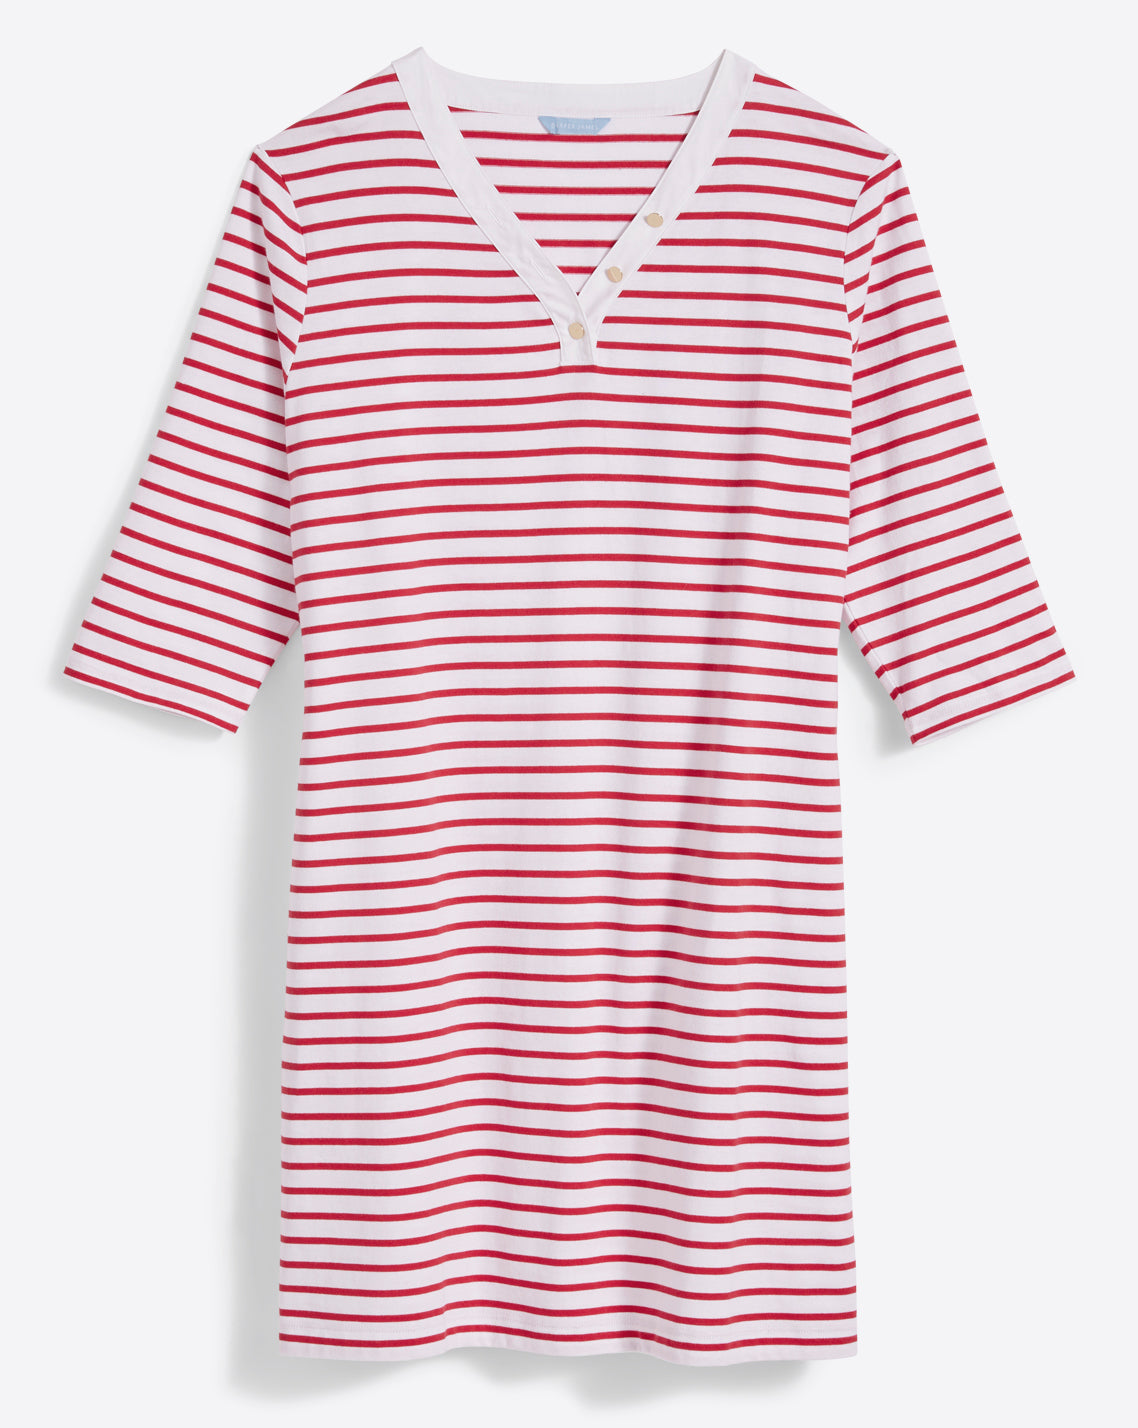 V-Neck T-Shirt Dress in Lipstick Red Mariner Stripe